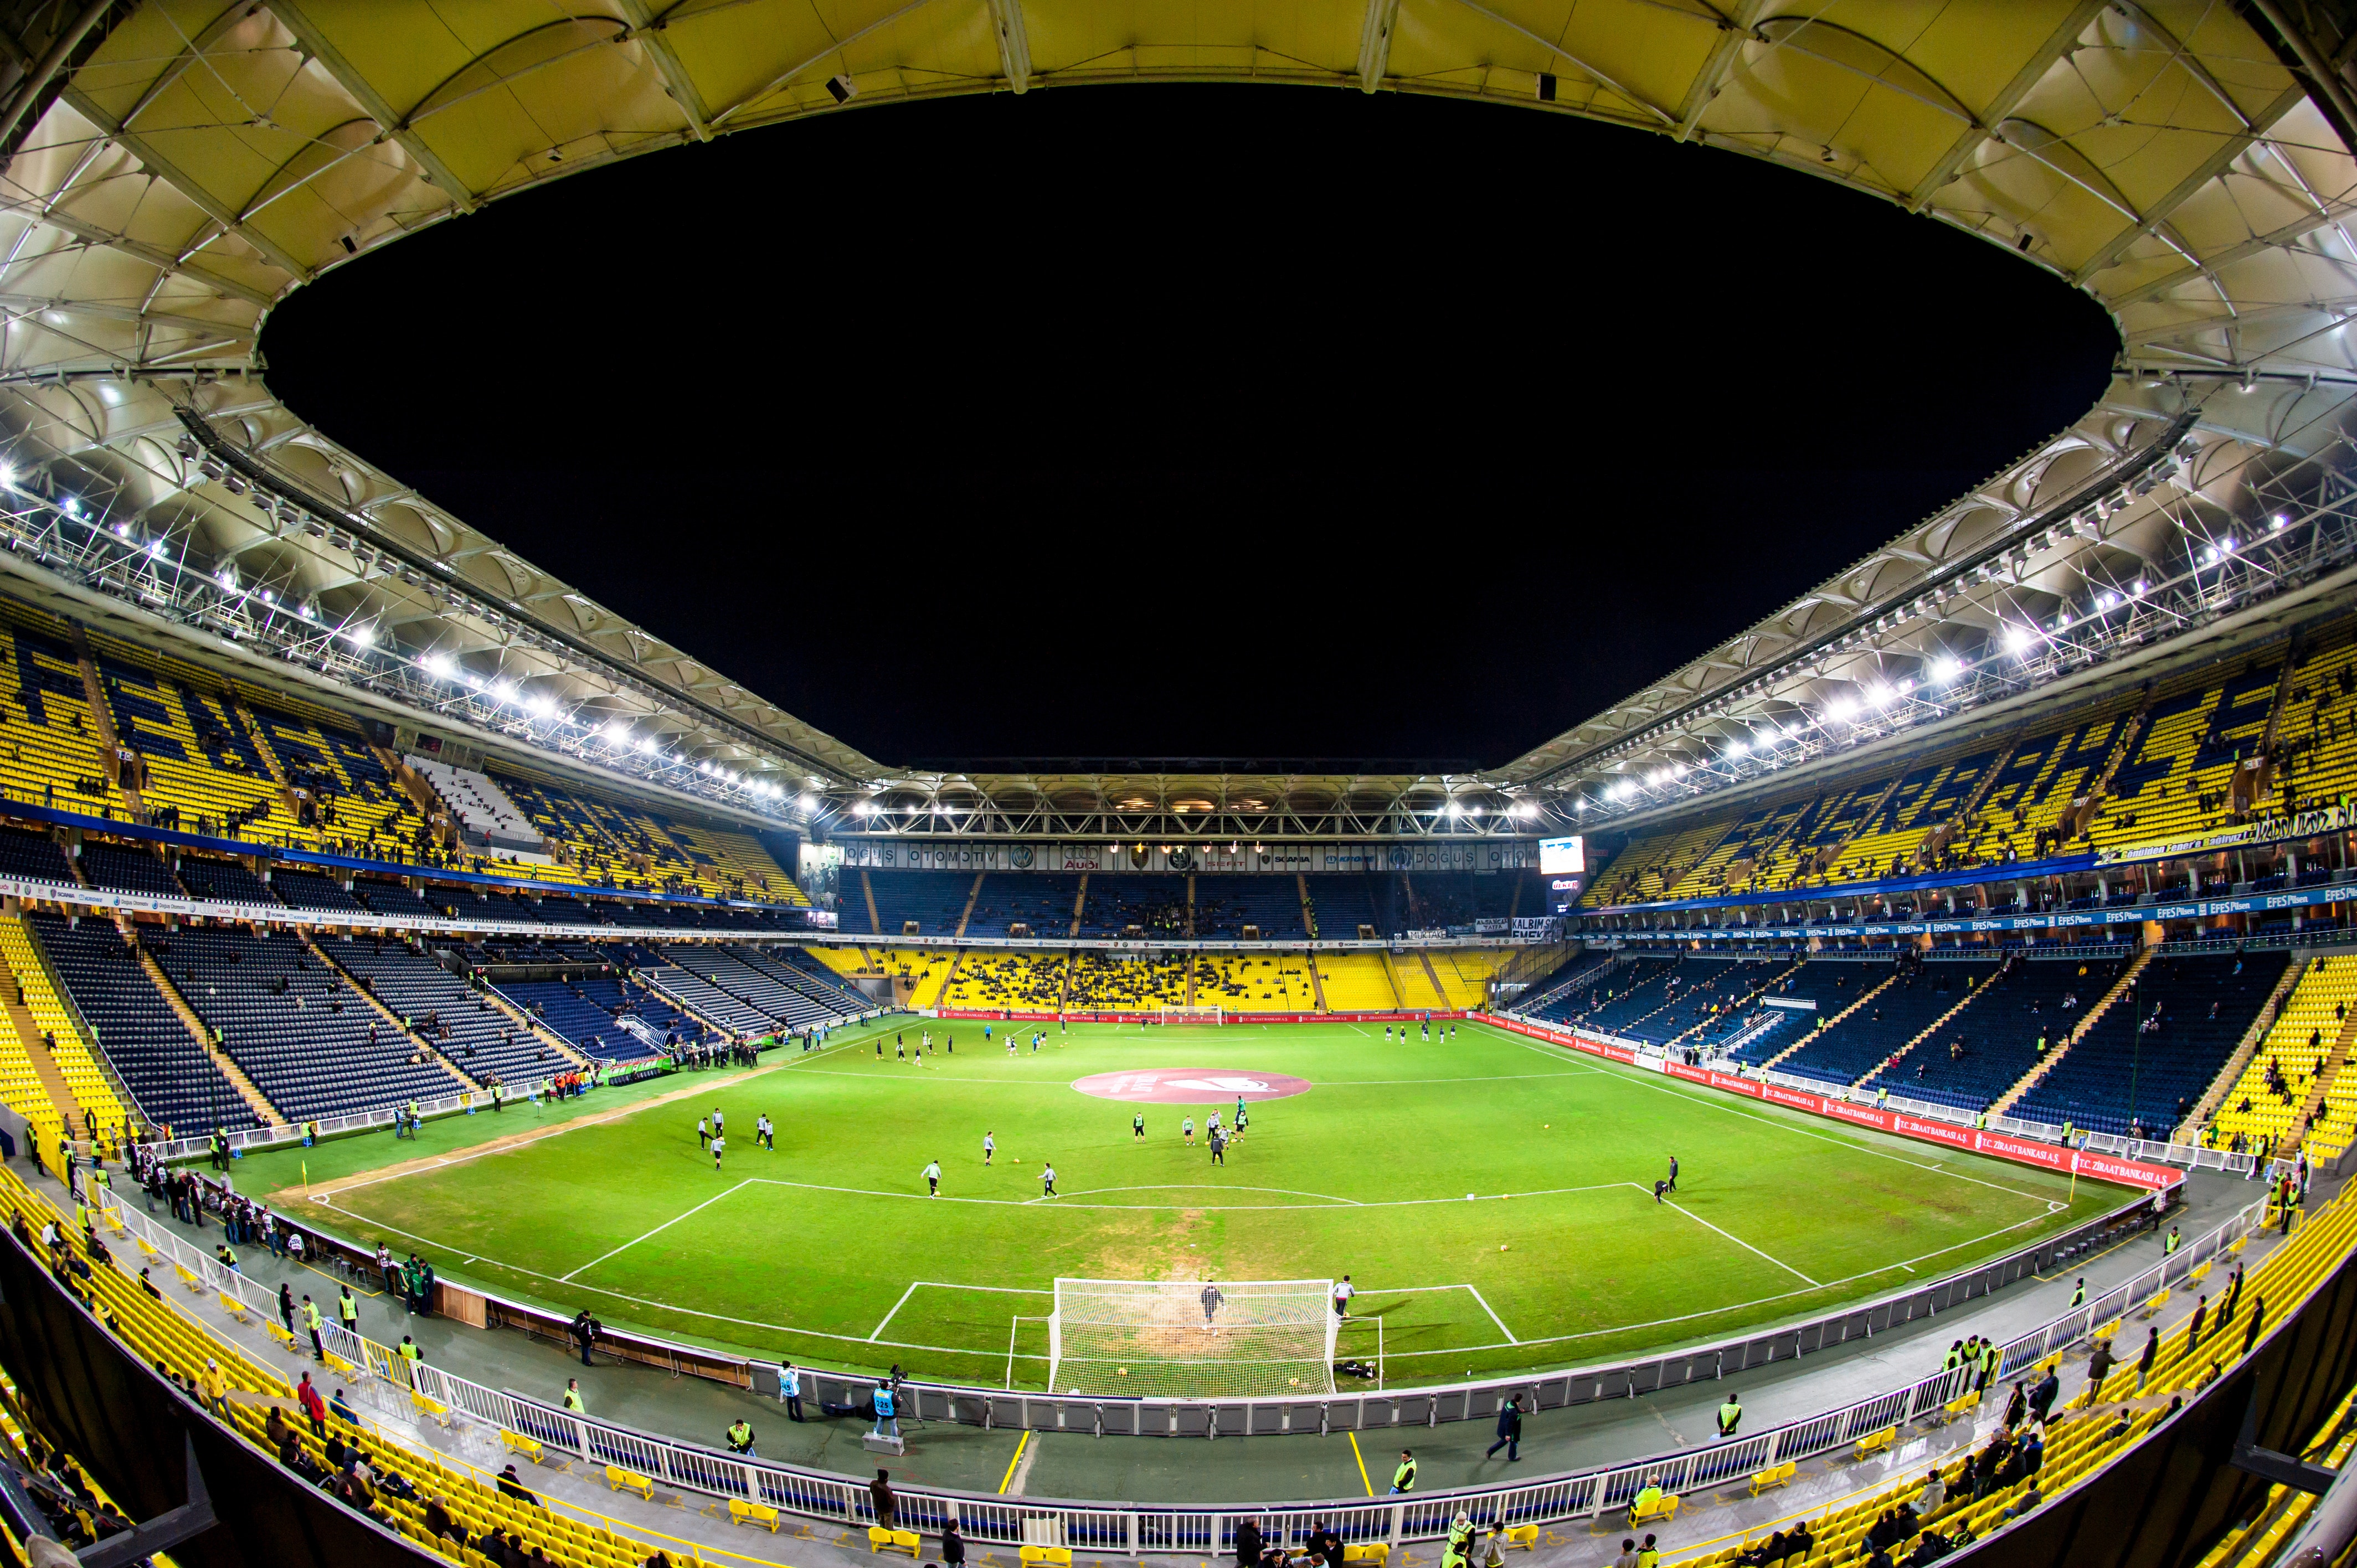 A soccer stadium in Turkey.